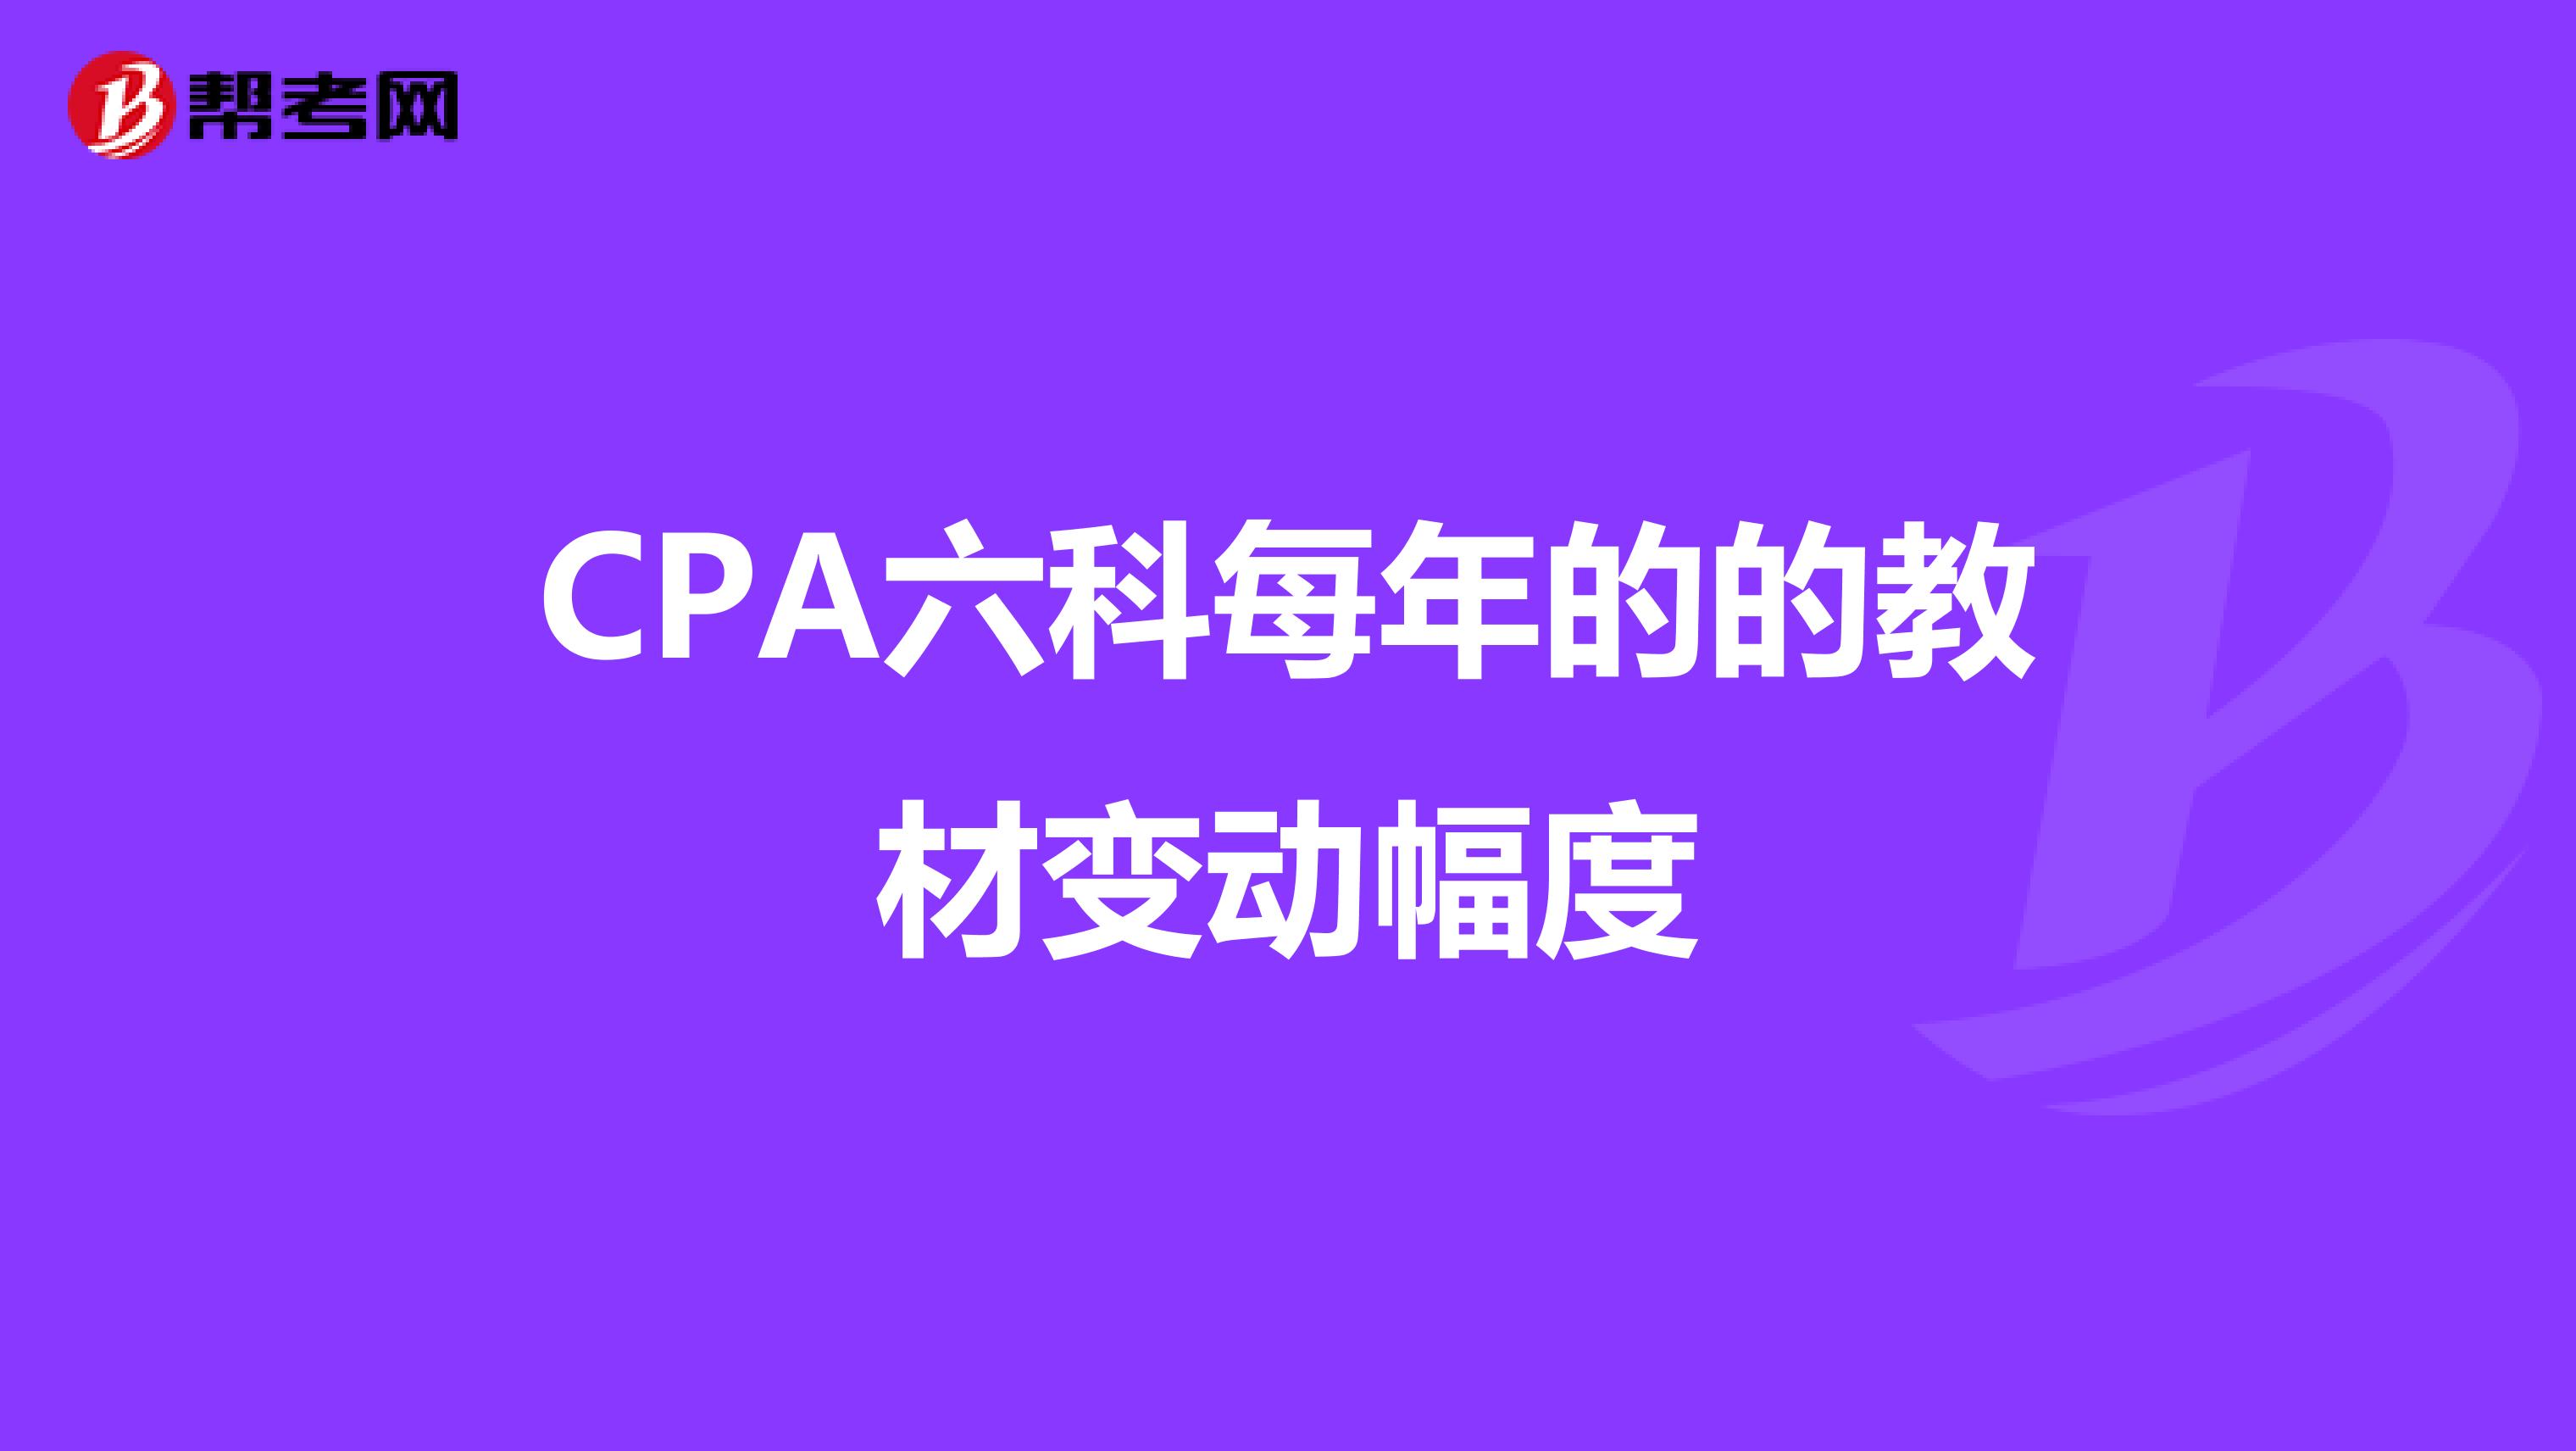 CPA六科每年的的教材变动幅度